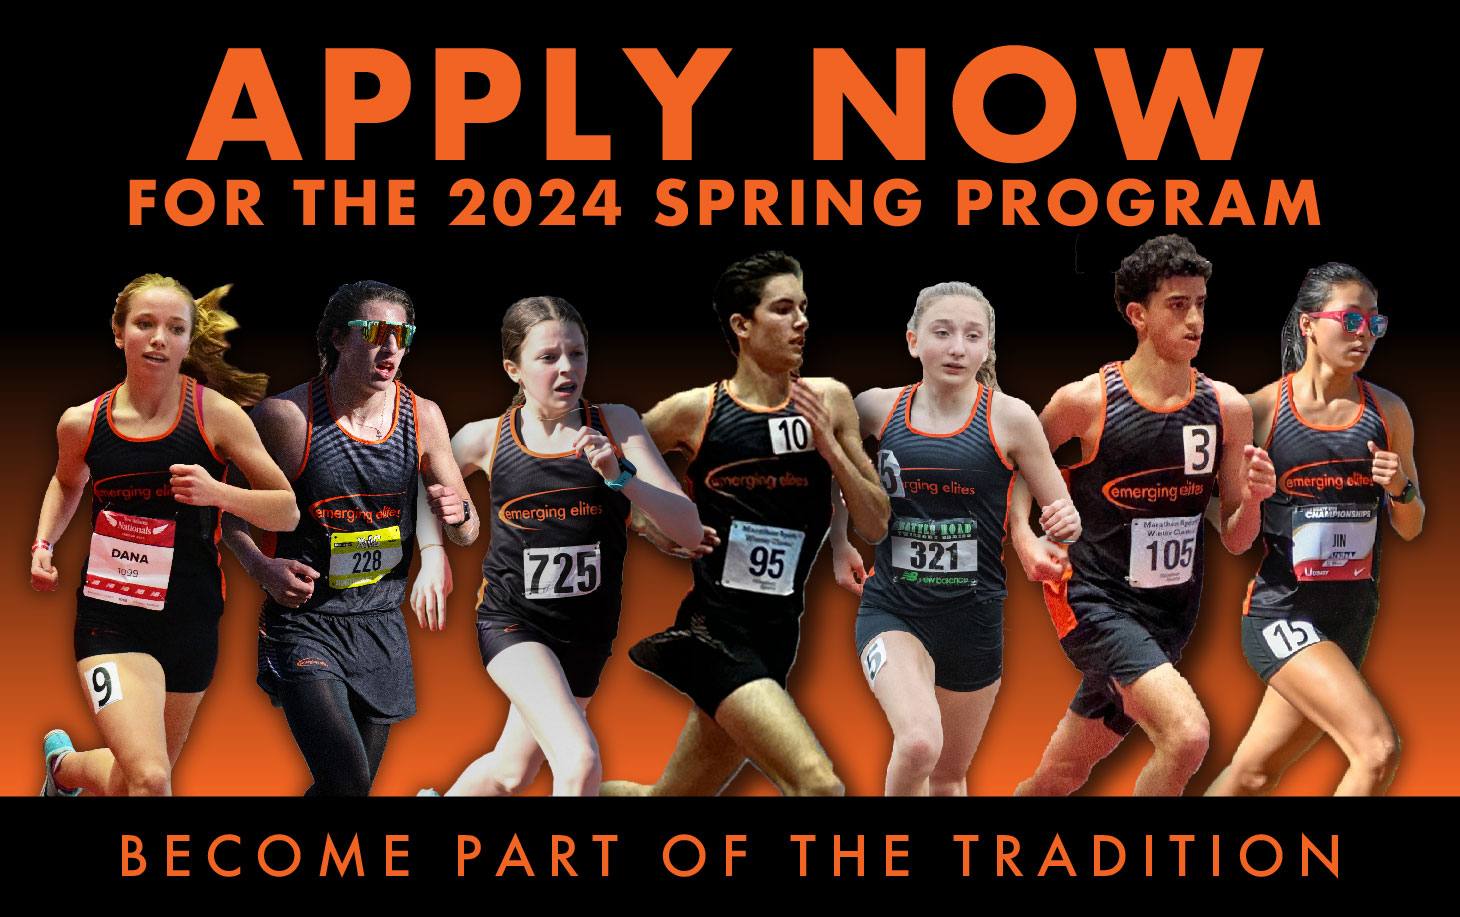 Apply now for the Spring Program